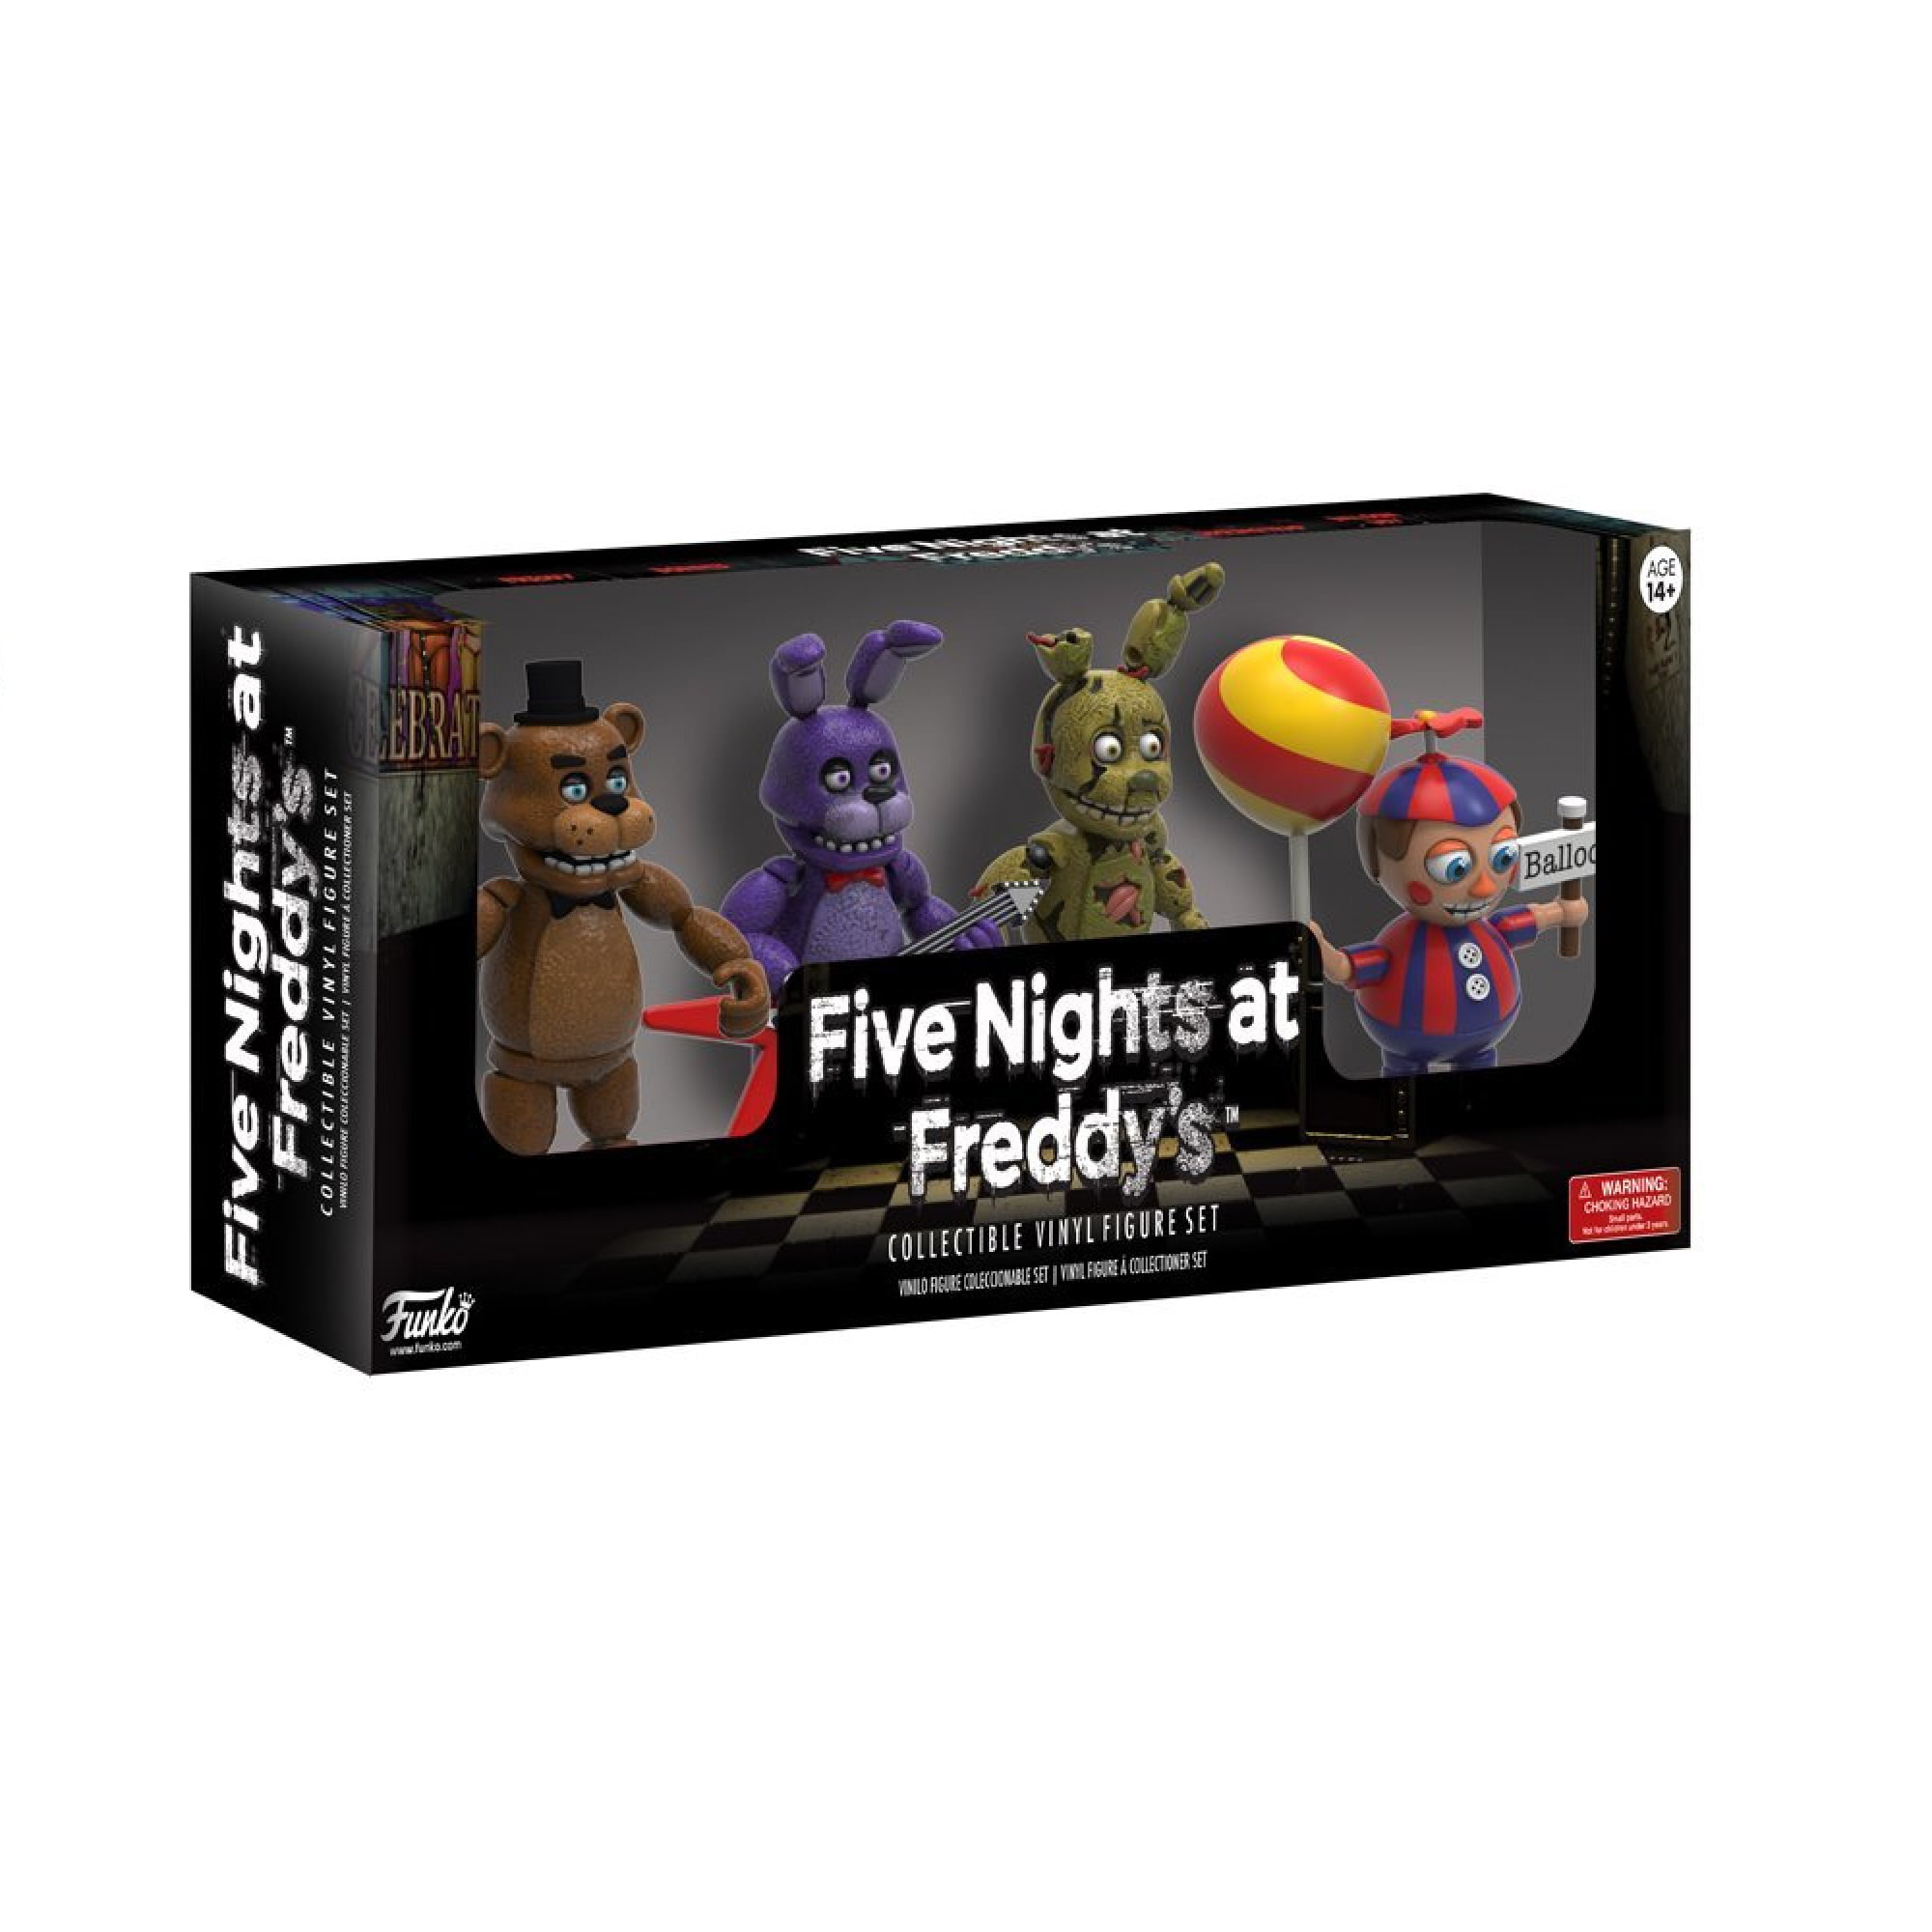 Five Nights at Freddy's 2-inch Four Pack Vinyl Figures Set #1 (NEW) U.S.  Seller